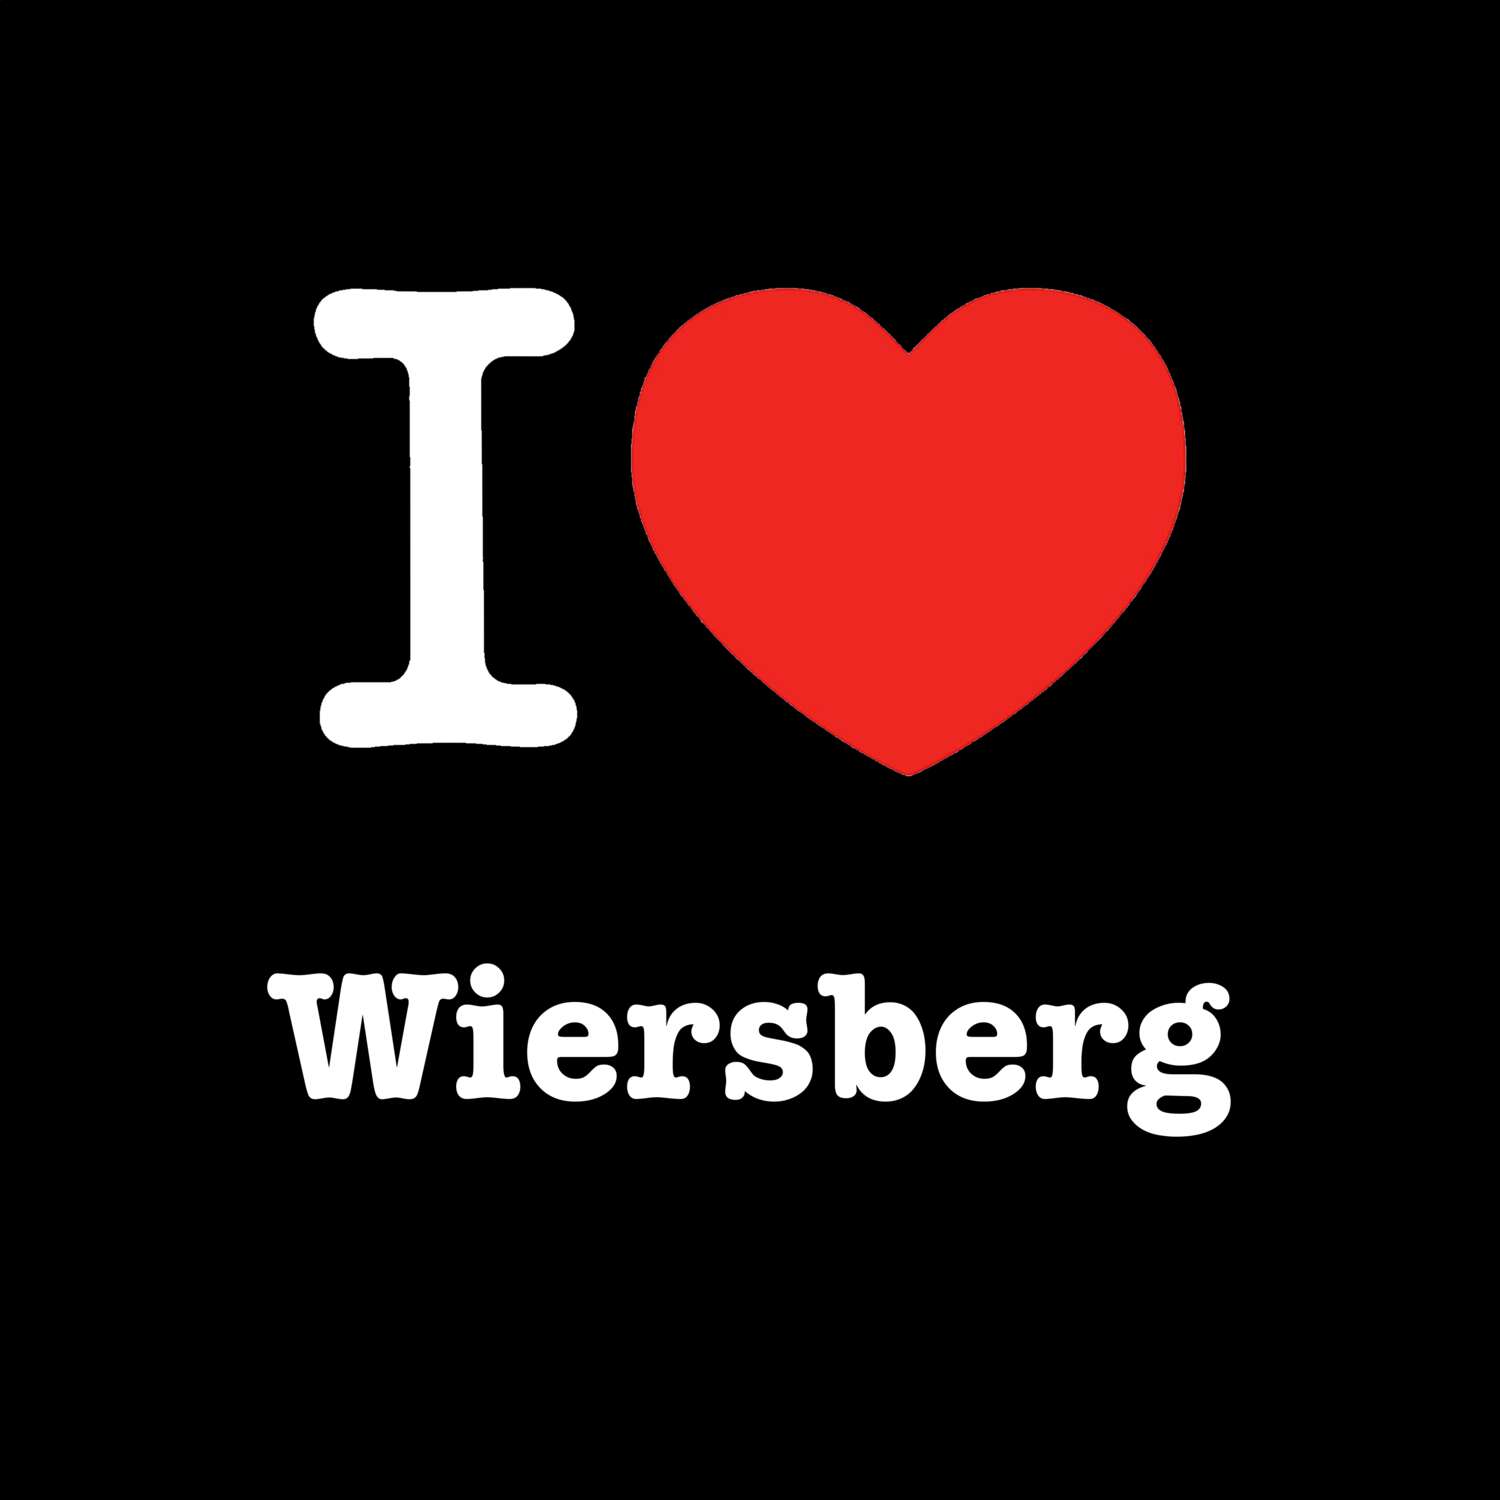 Wiersberg T-Shirt »I love«